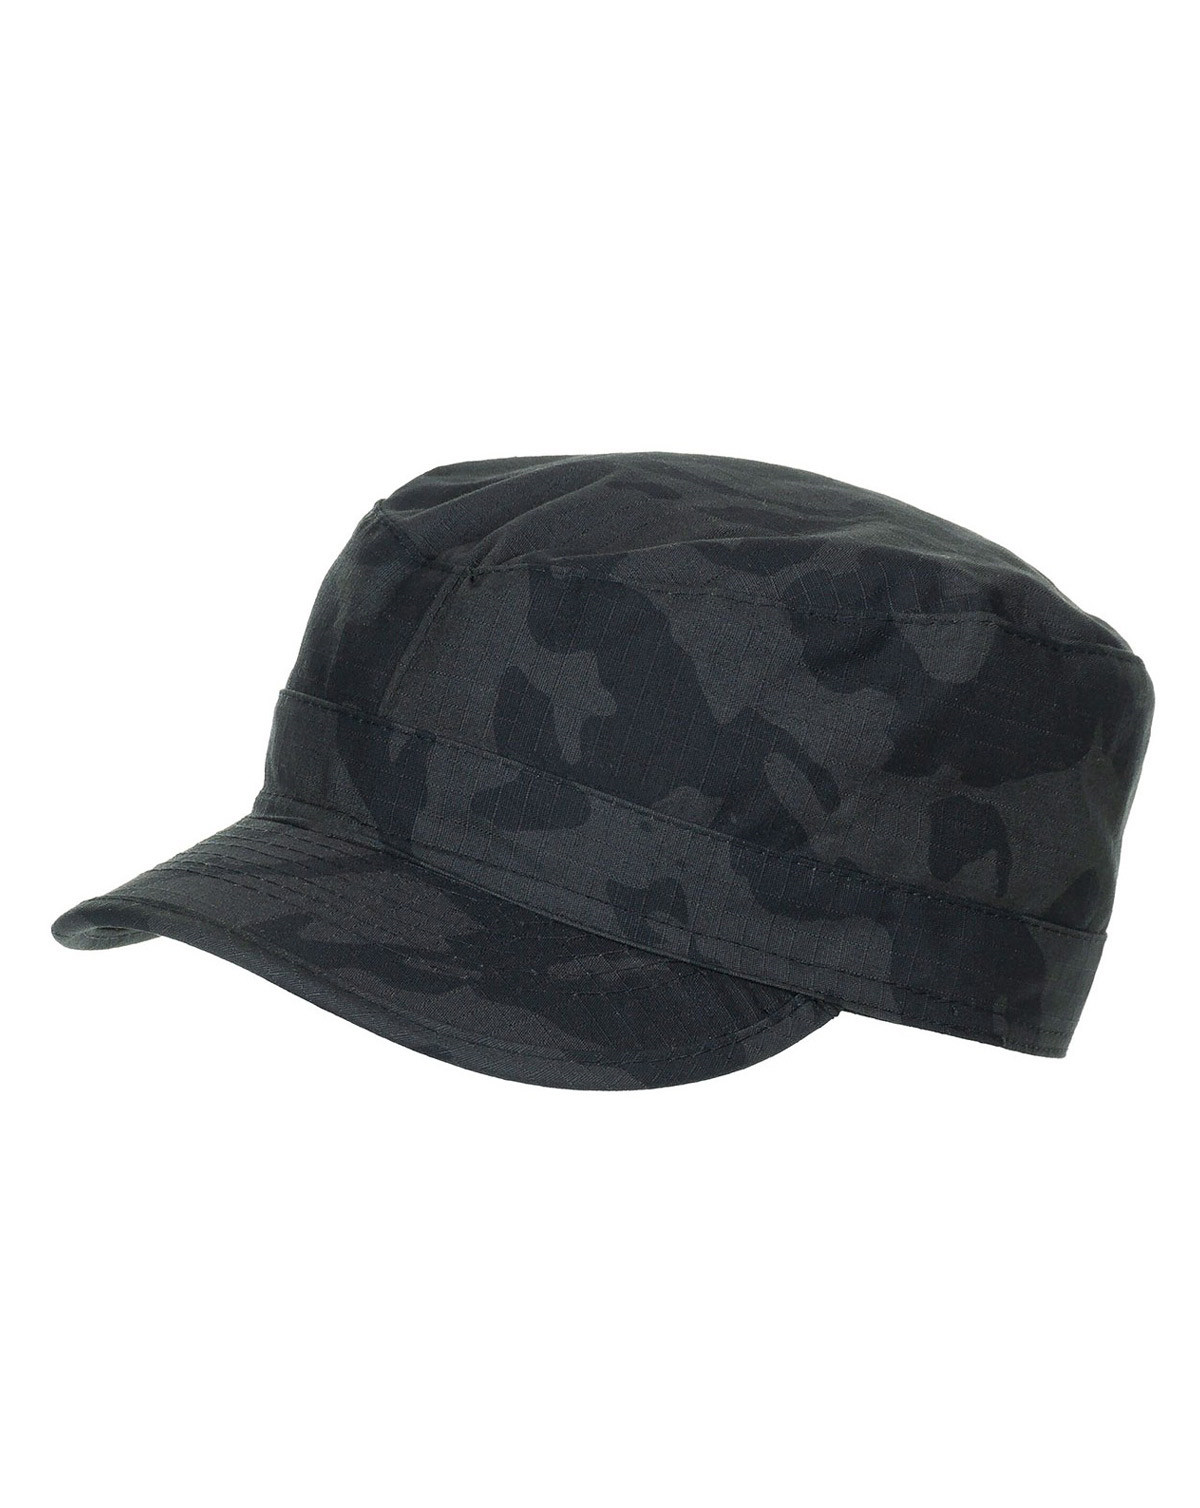 MFH U.S. Army Caps, div. Camouflager (Black Camo, L) (4044633081452)